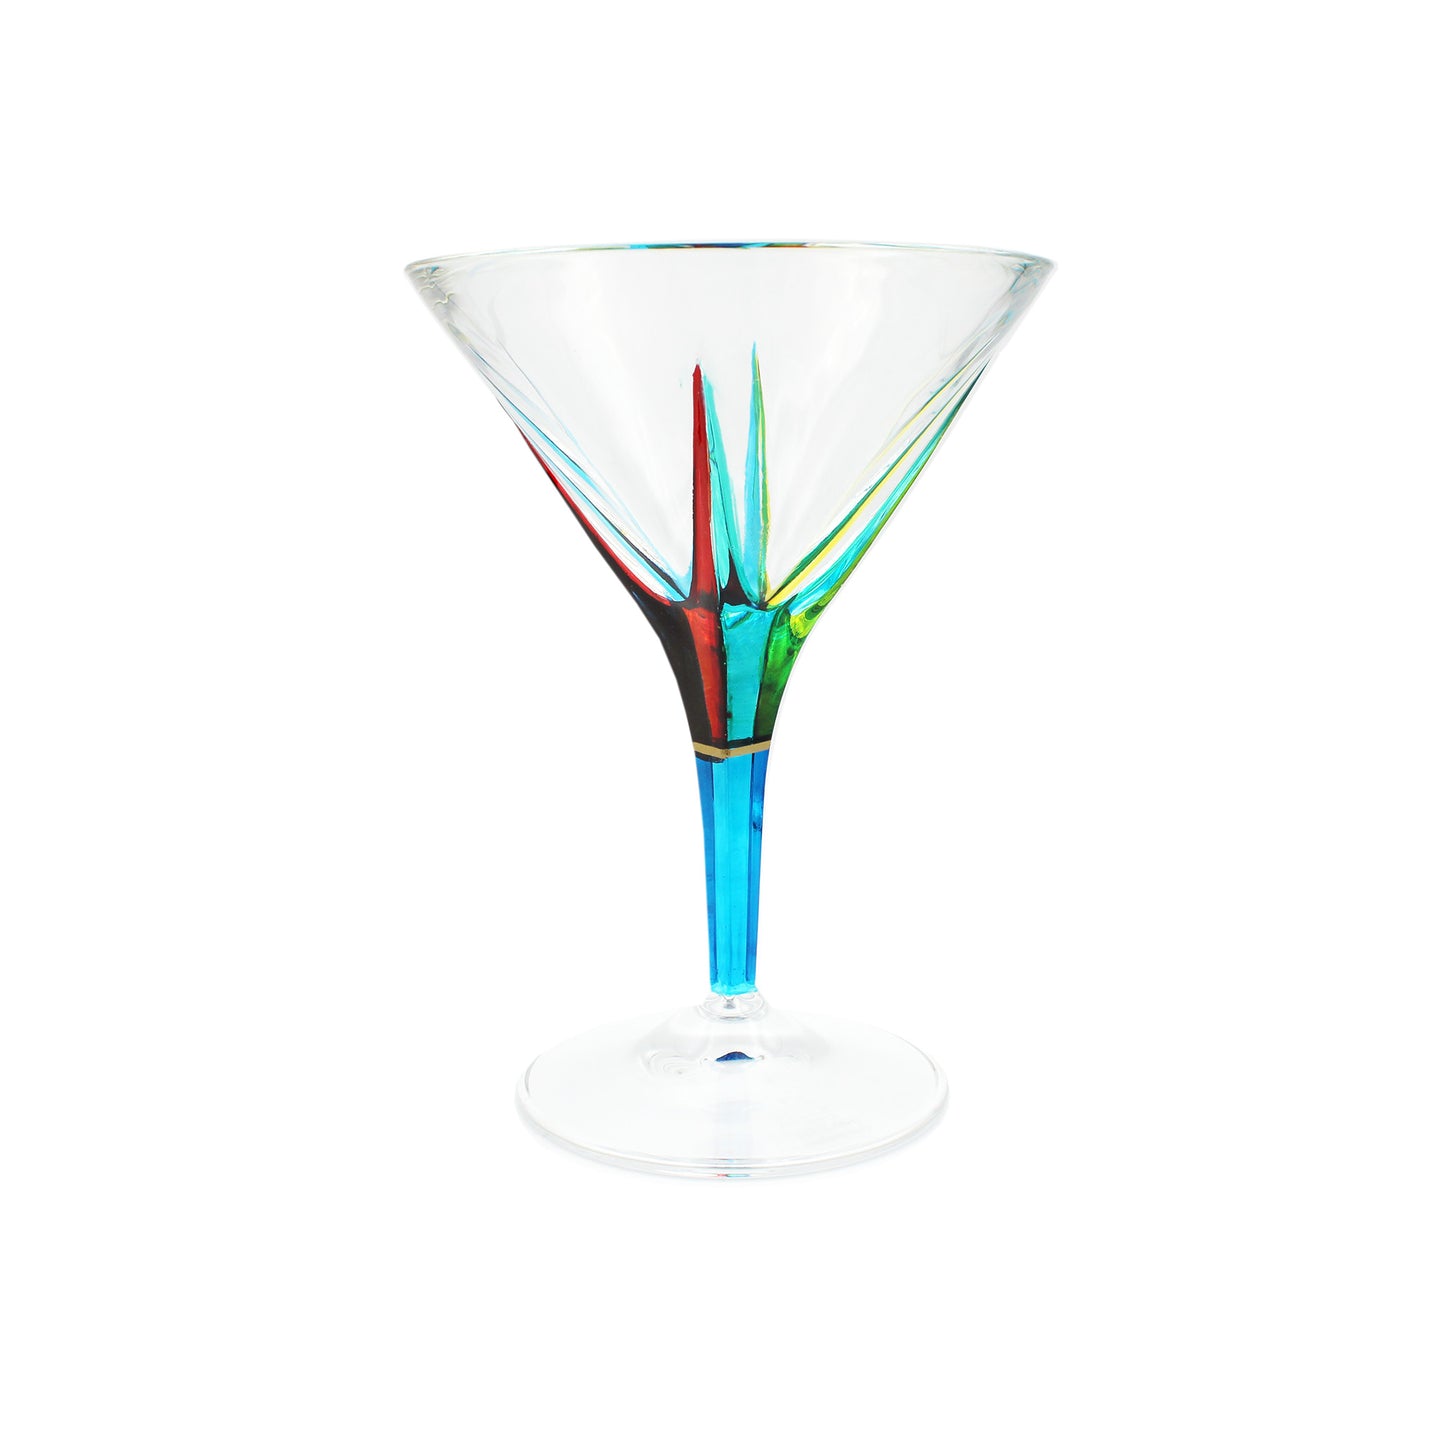 CC Zecchin Fusion Martini Glass in Light Blue - Chrysler Museum Shop